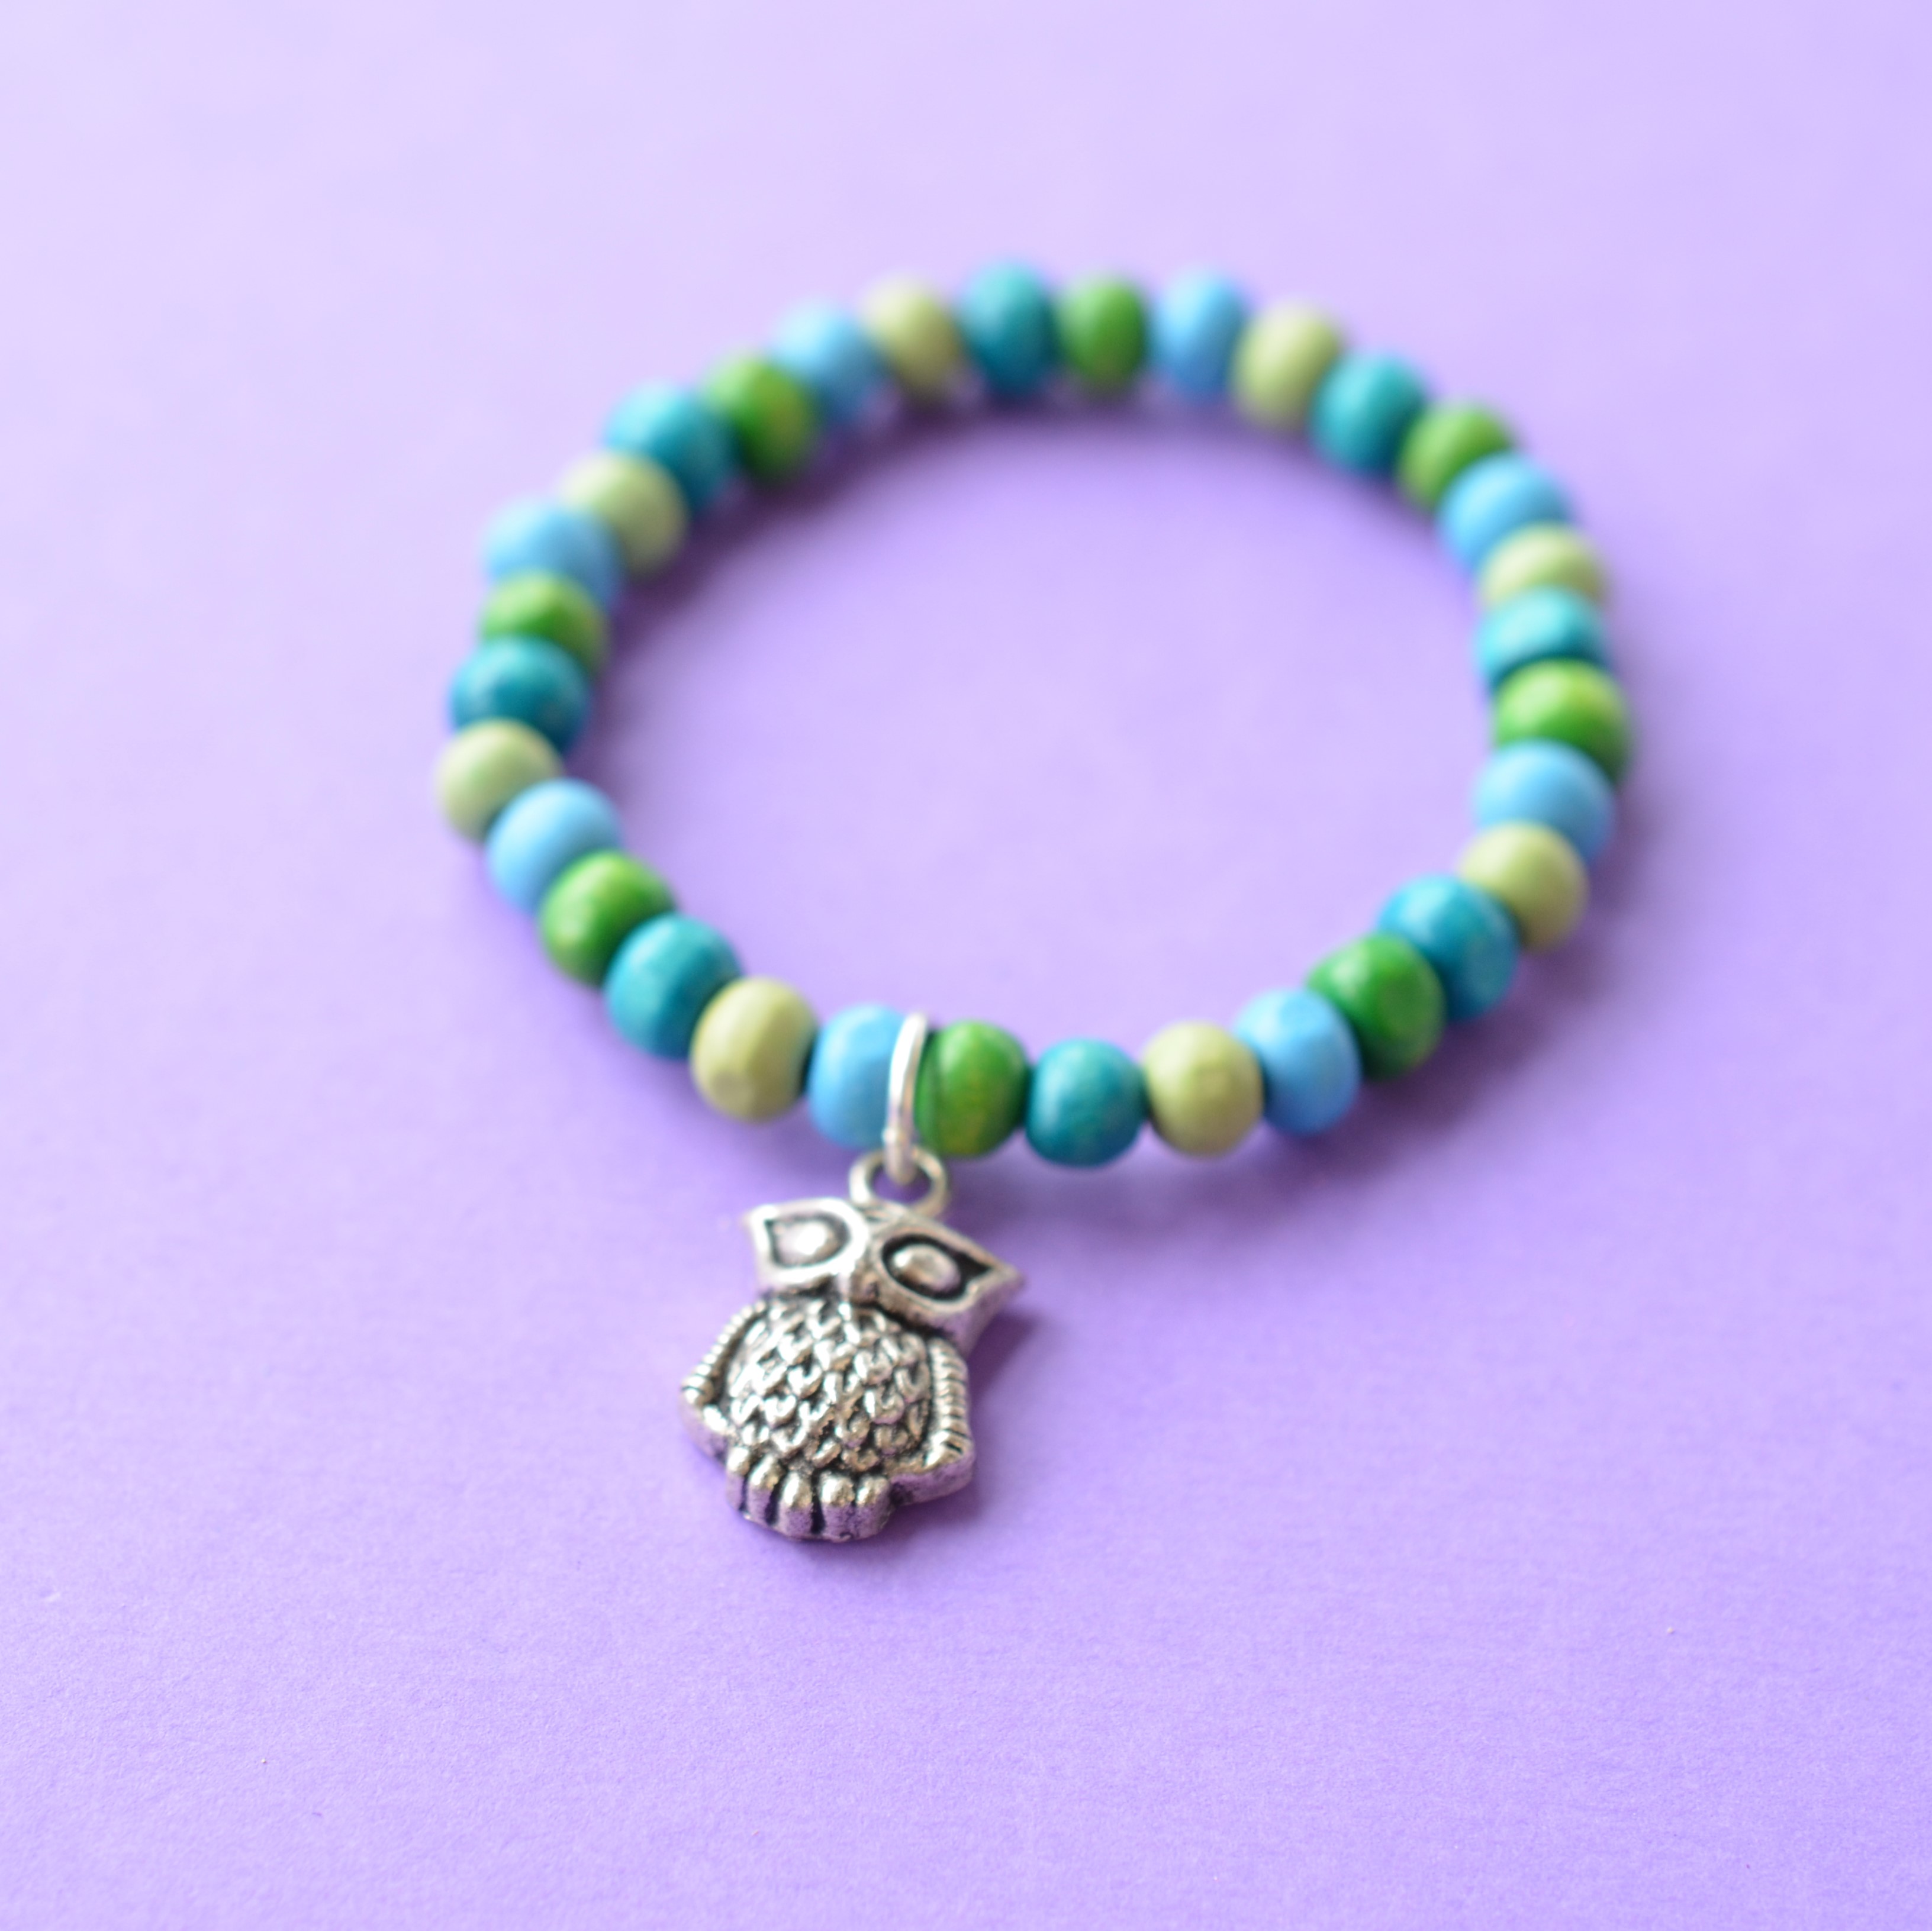 Colourful Child’s Wooden Bead Owl Charm Bracelet